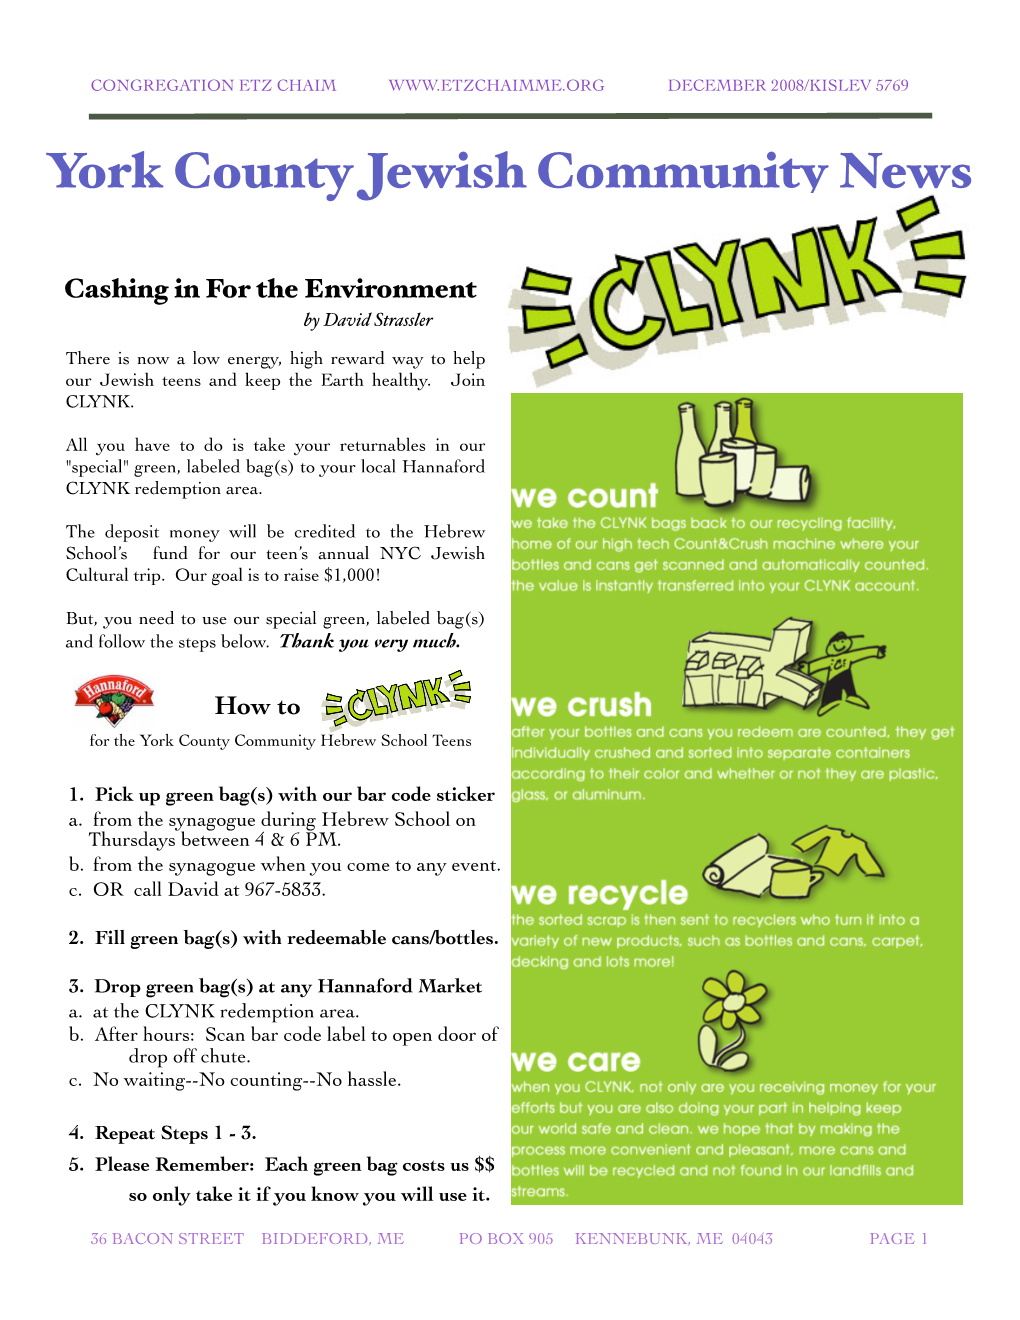 YCJC-Newsletter-Dec-2008